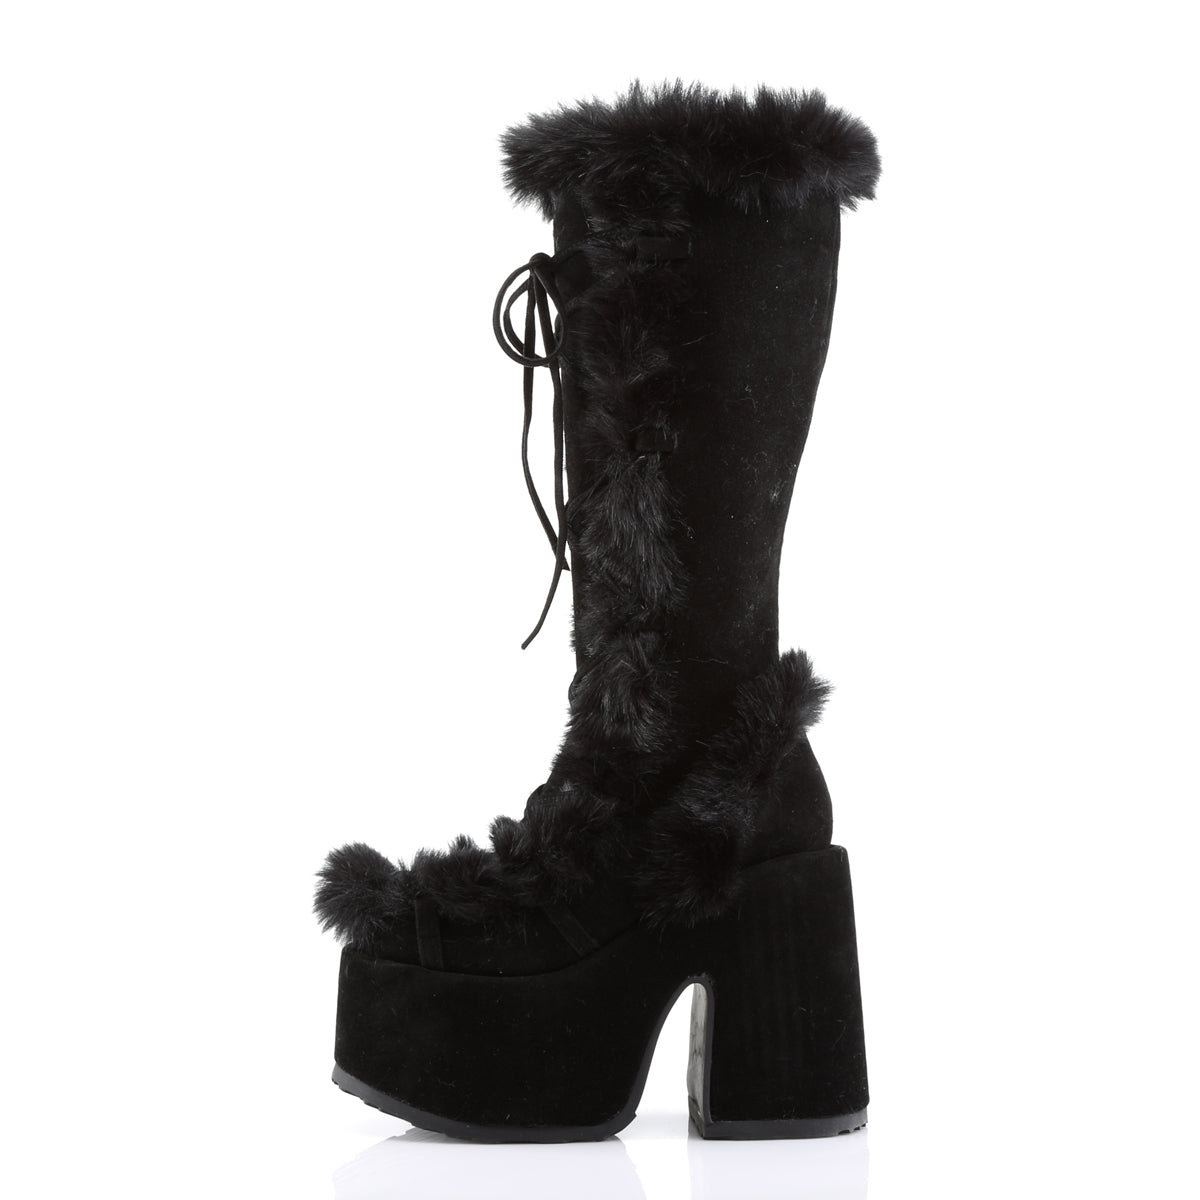 CAMEL-311 Demoniacult Alternative Footwear Women's Knee High Black Boots